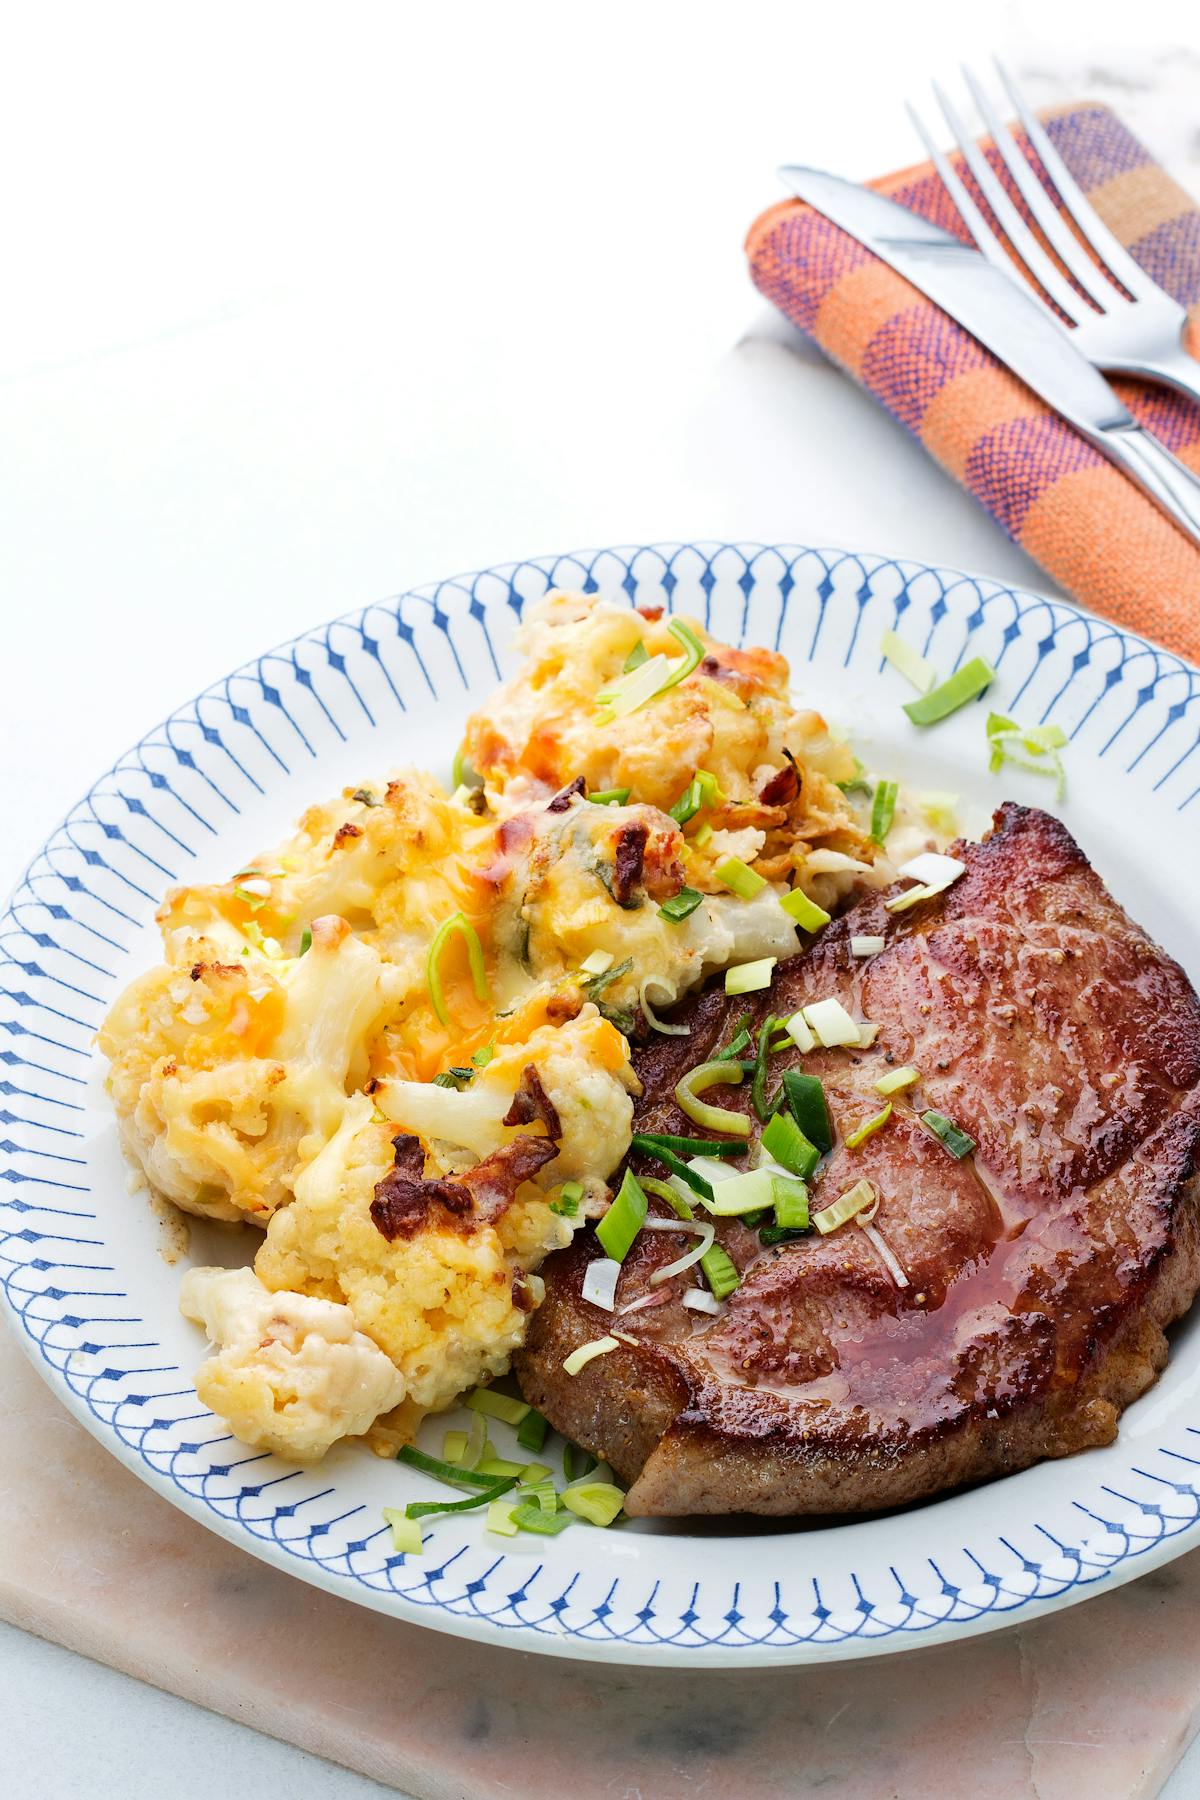 Pork shoulder chops with cauliflower au gratin